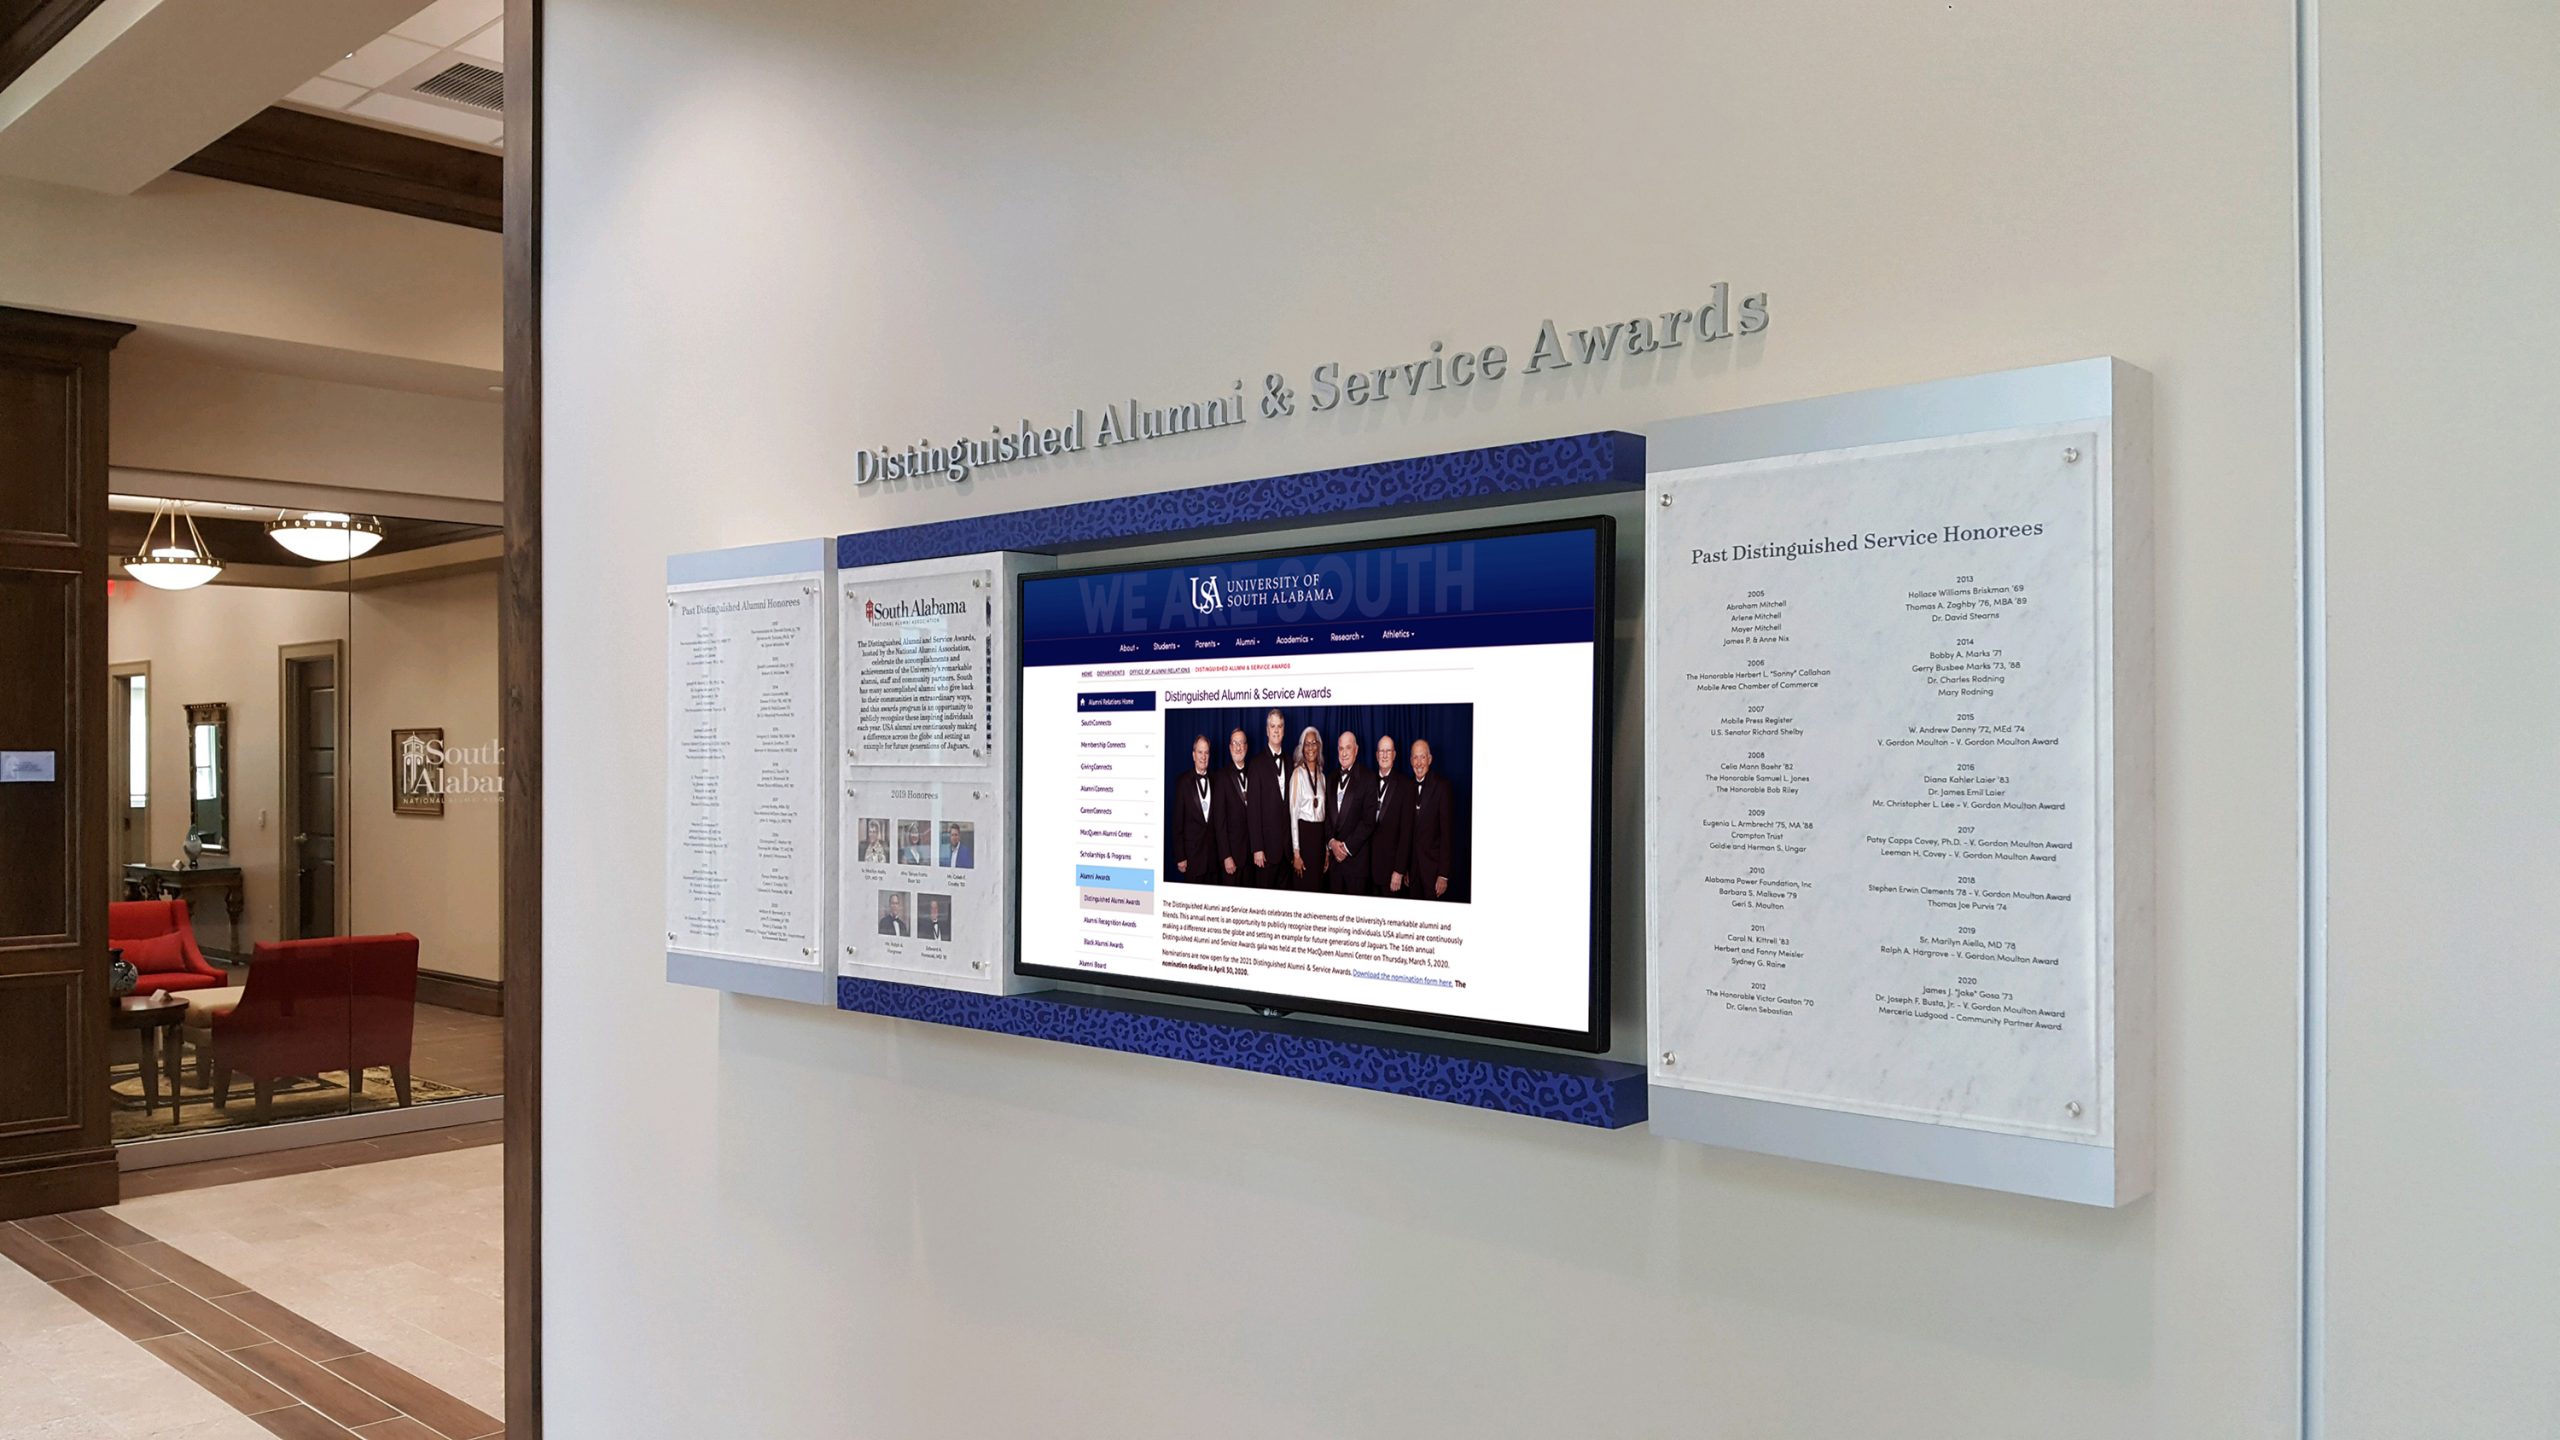 Distinguished Alumni Award, Capital Campaign, Service Award, Interactive Computer, Clear Change, Donor Display